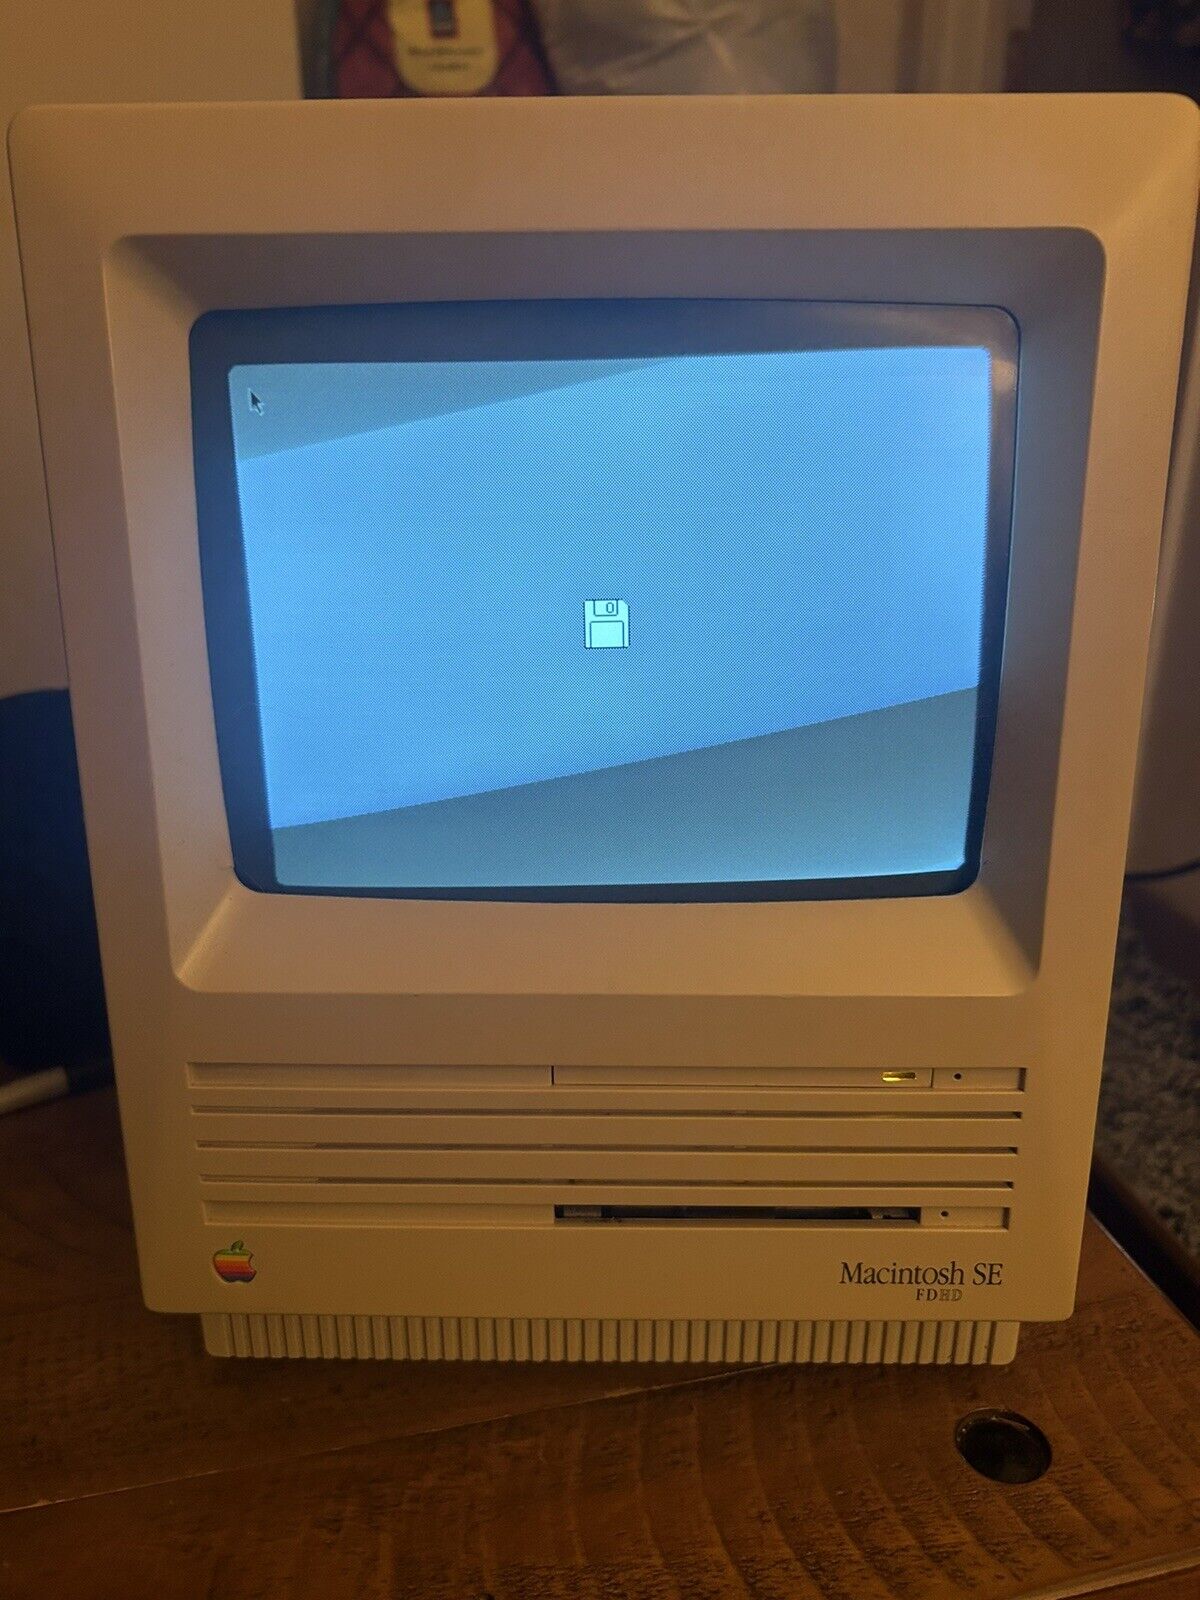 Apple Macintosh SE. FDHD. Model No. M5011. Vintage Computer